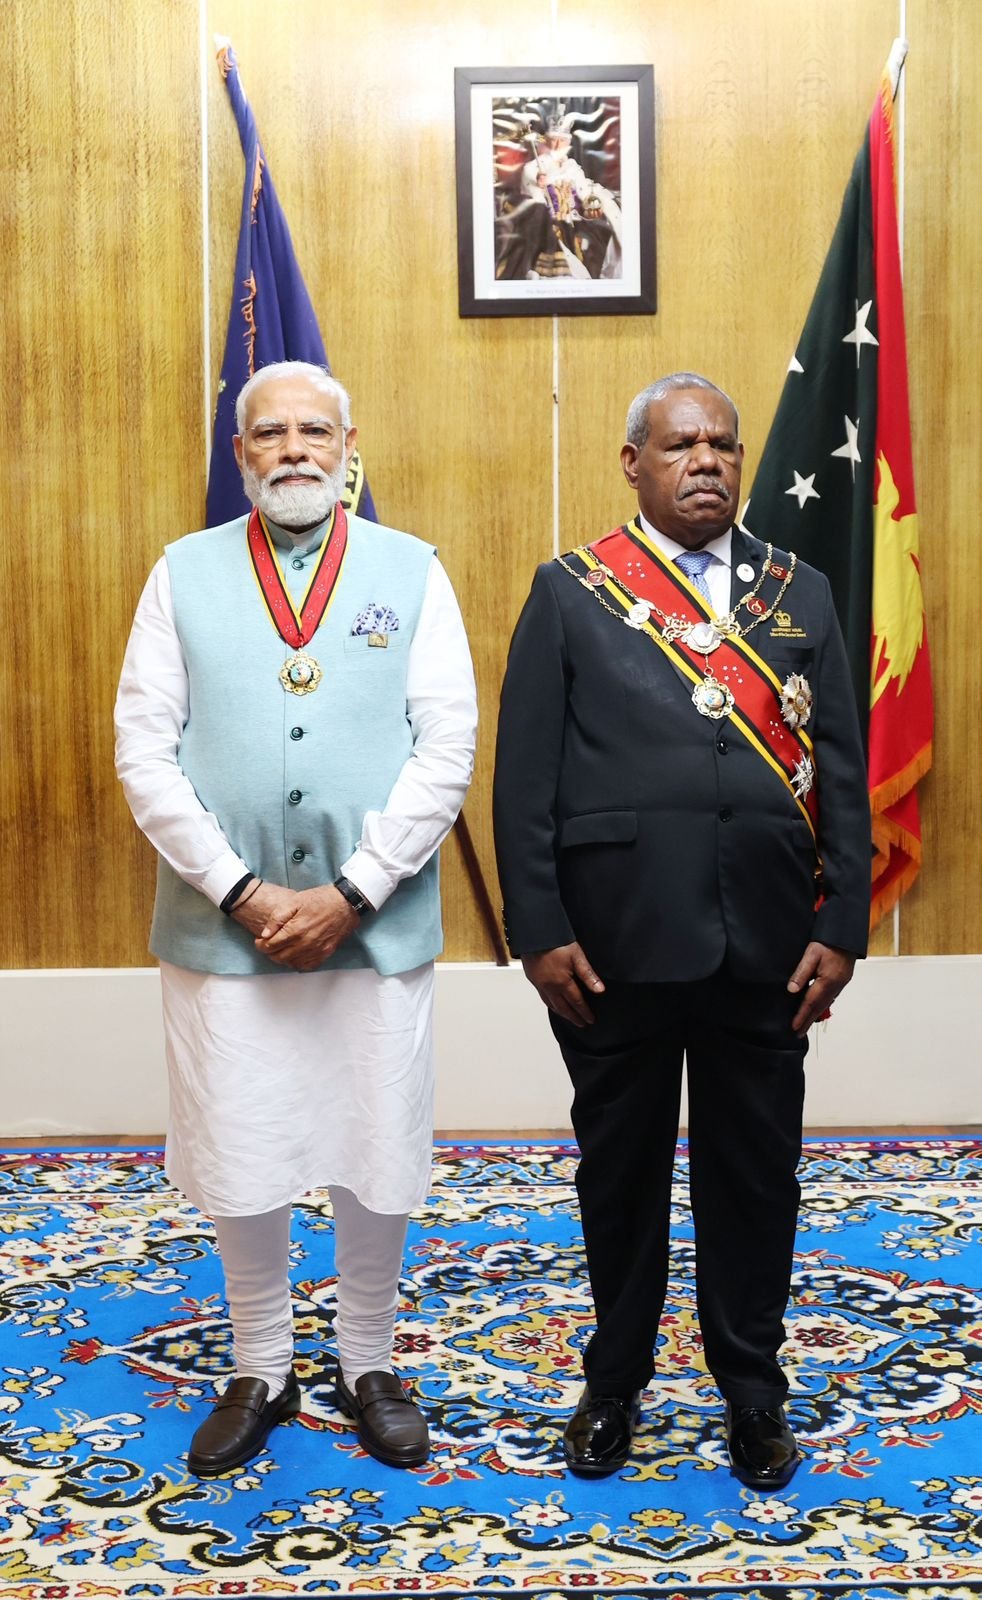 प्रधानमंत्री मोदी को मिला फिजी का सर्वोच्च सम्मान